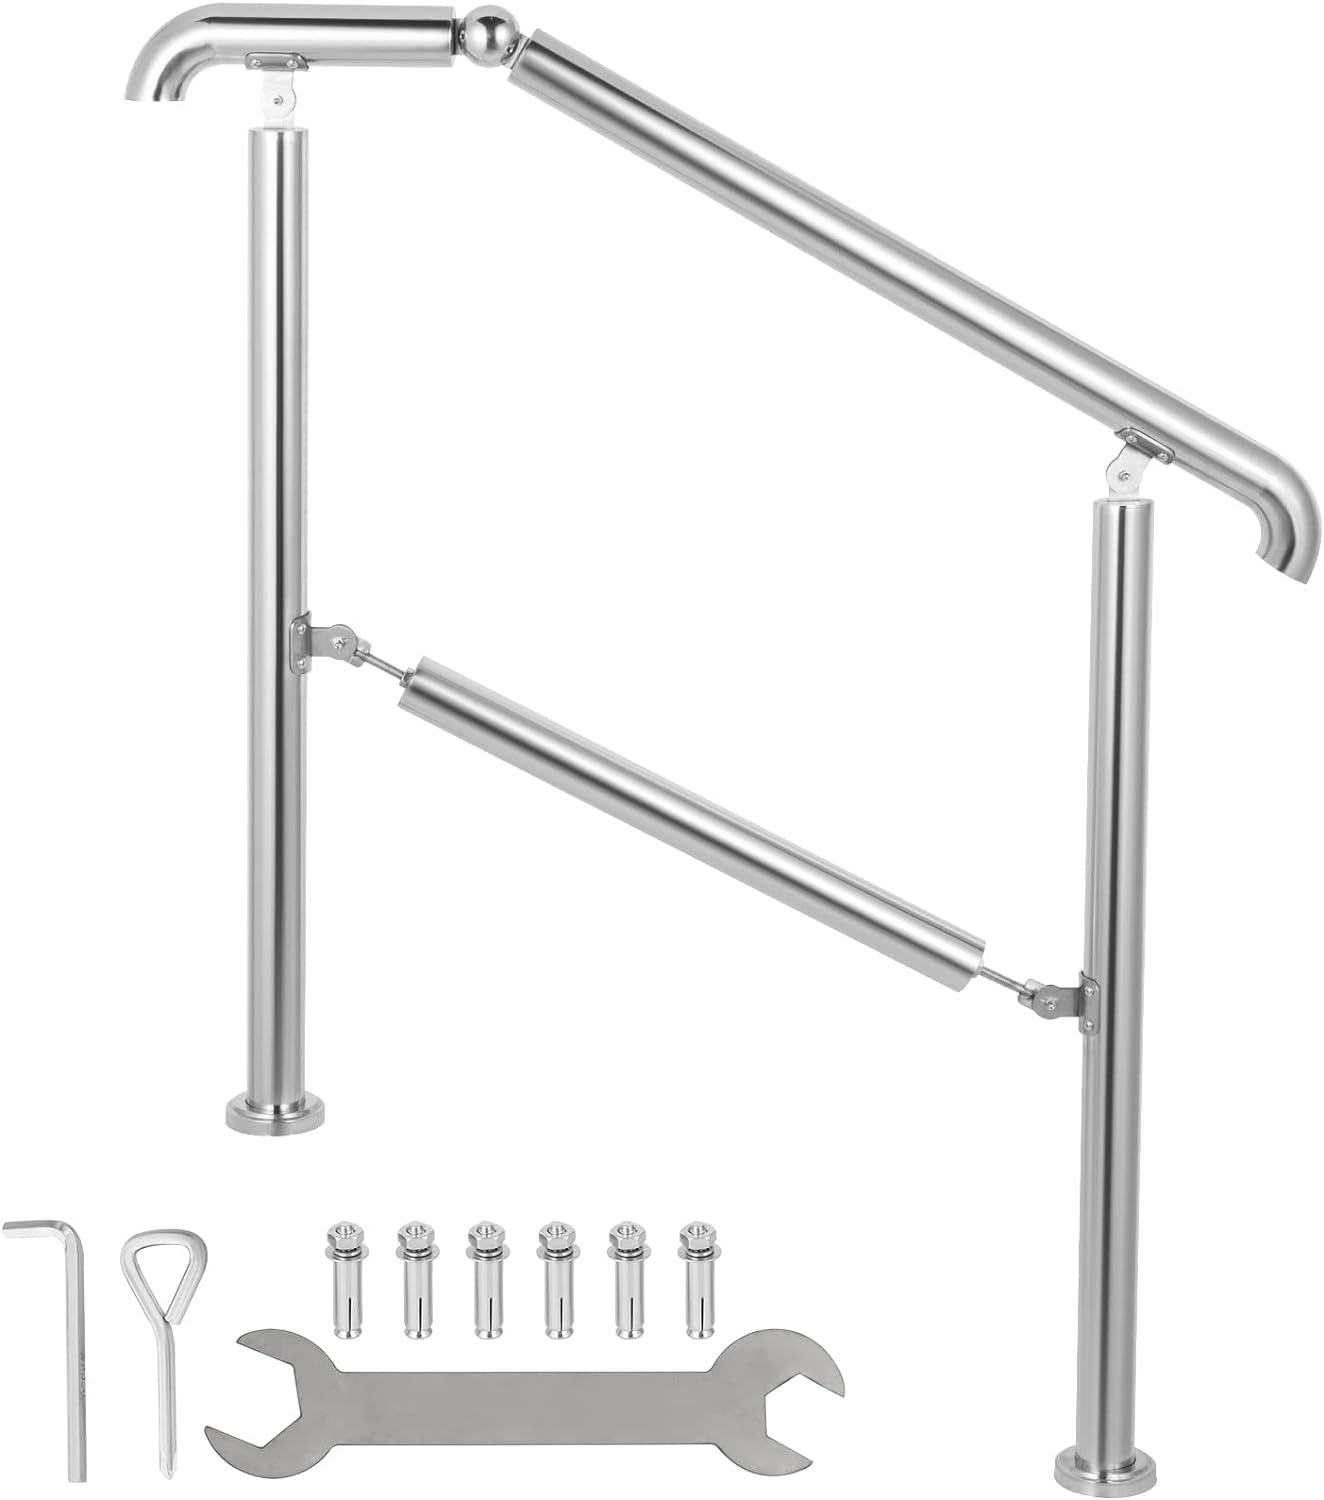 Handrail, 3 Step, Capacity 220 LBS, Adjustable, Stainless Steel, Silver